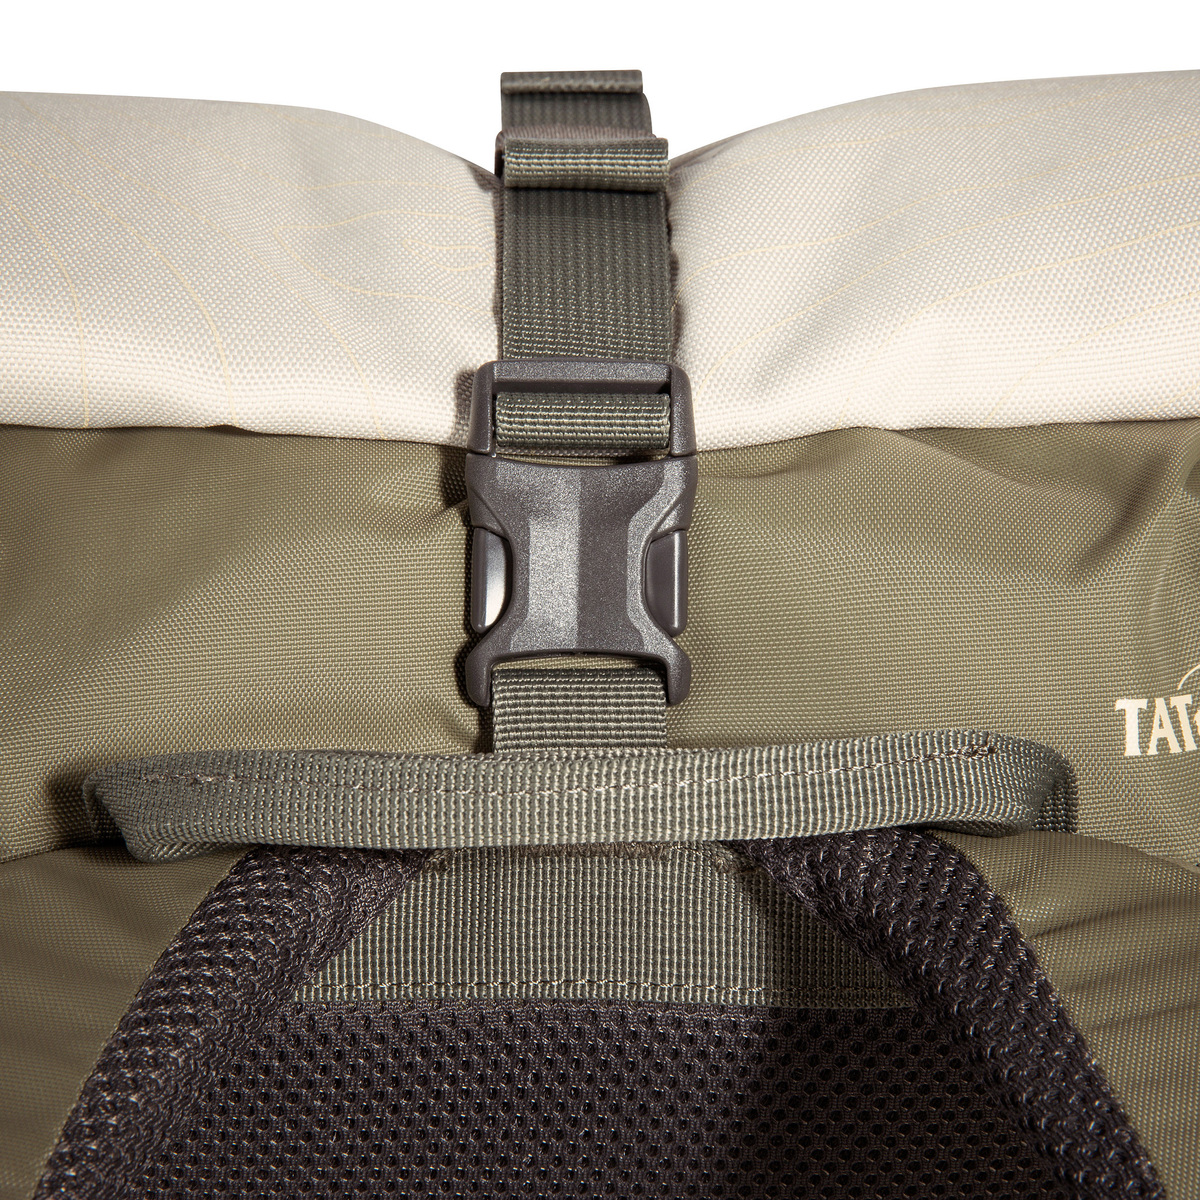 Daypacks - Grip Rolltop Pack S - Tatonka | Backpacks, Tents, Outdoor ...